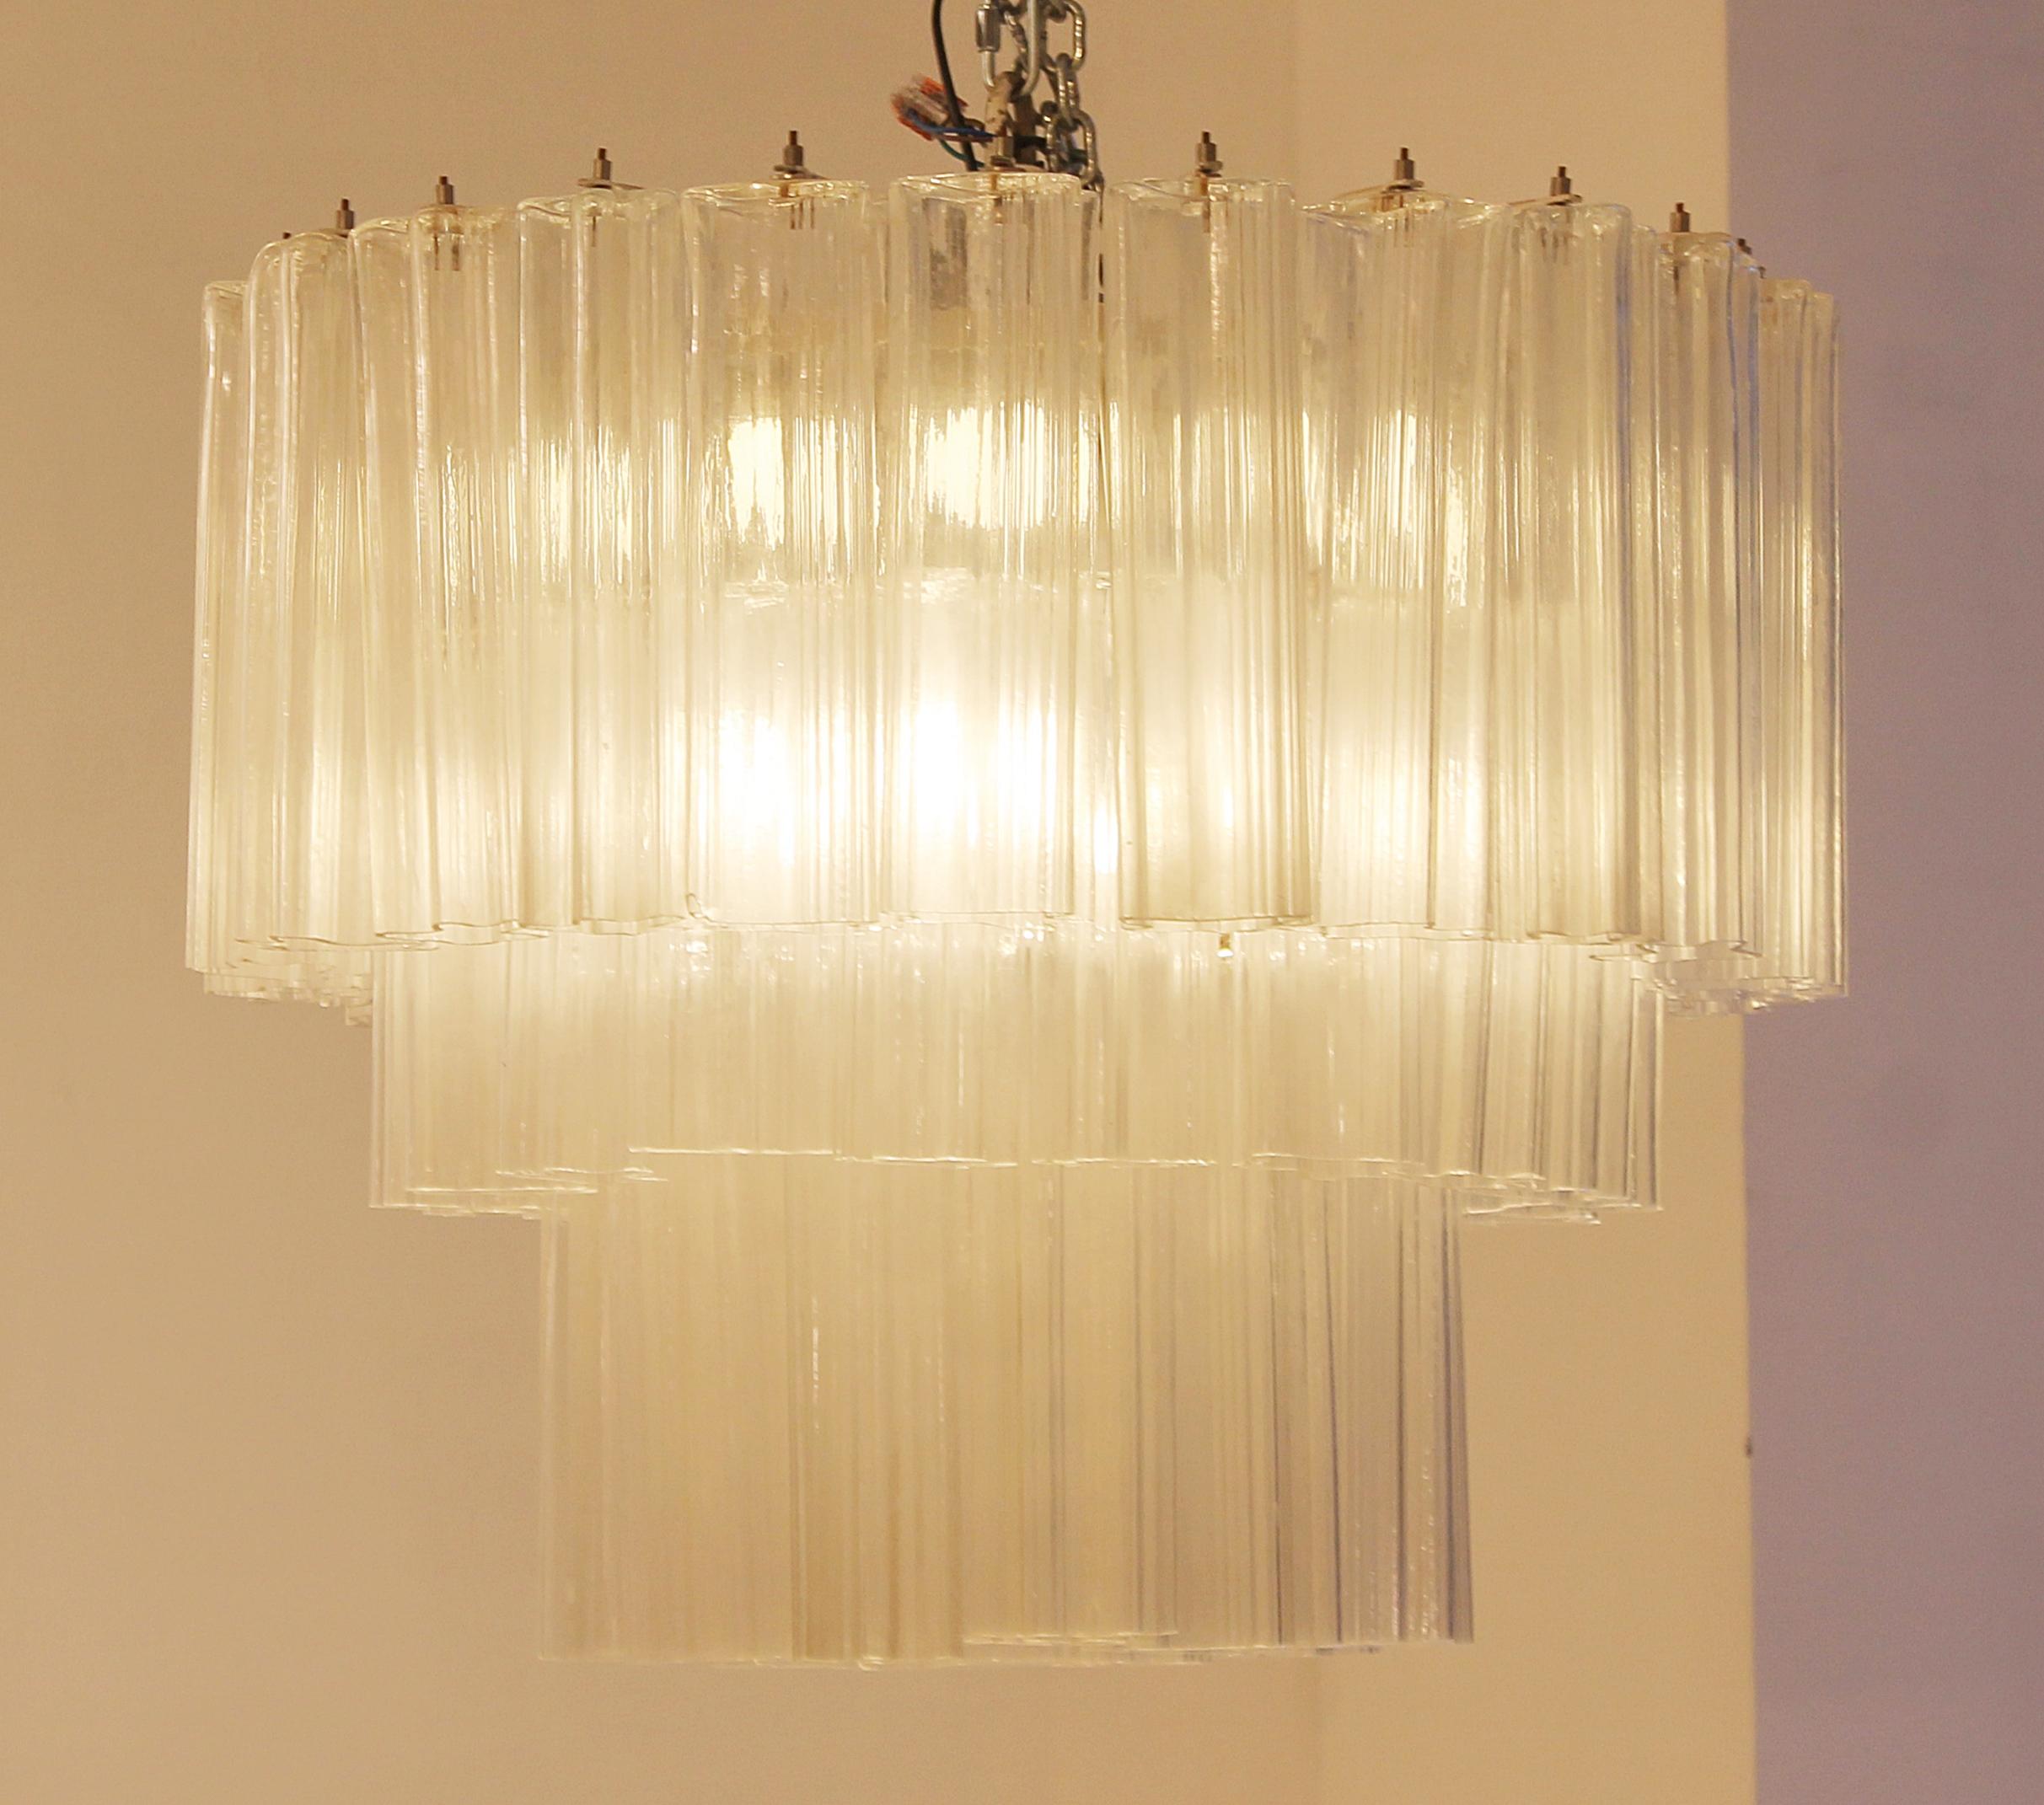 Murano glass chandelier by Venini - Italy.